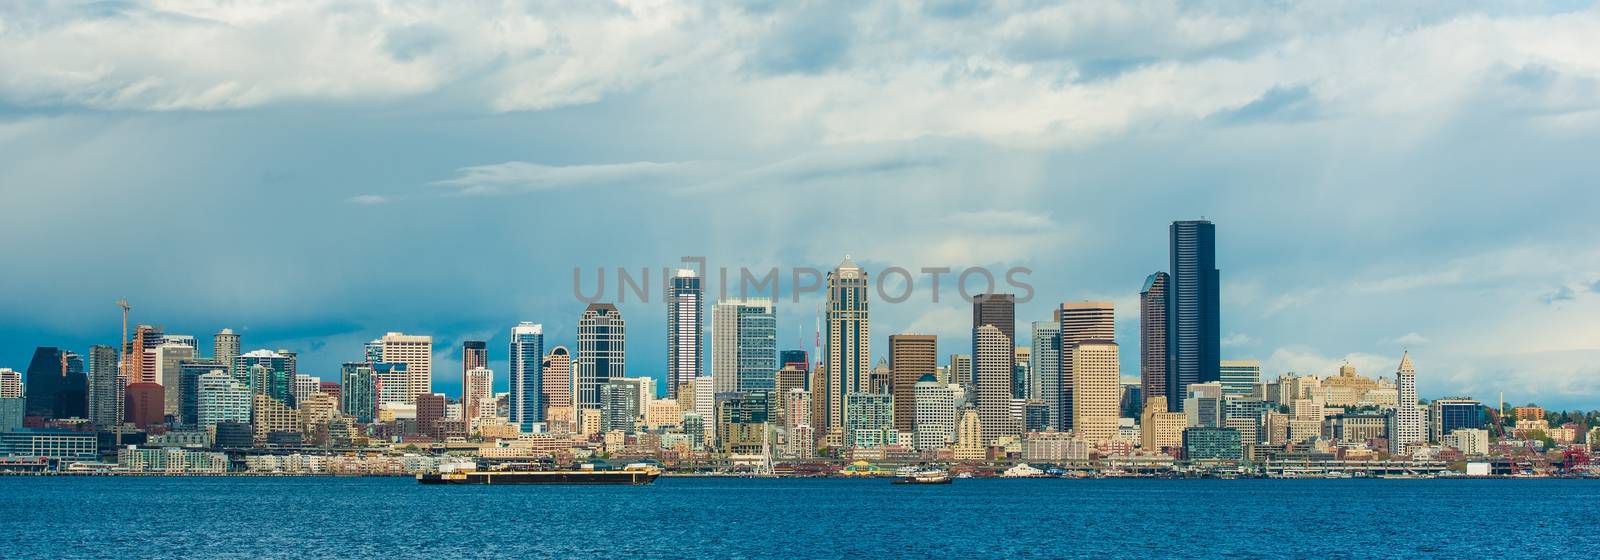 Seattle Skyline Panorama. Downtown Seattle, Washington, United States of America. Panoramic Photo.